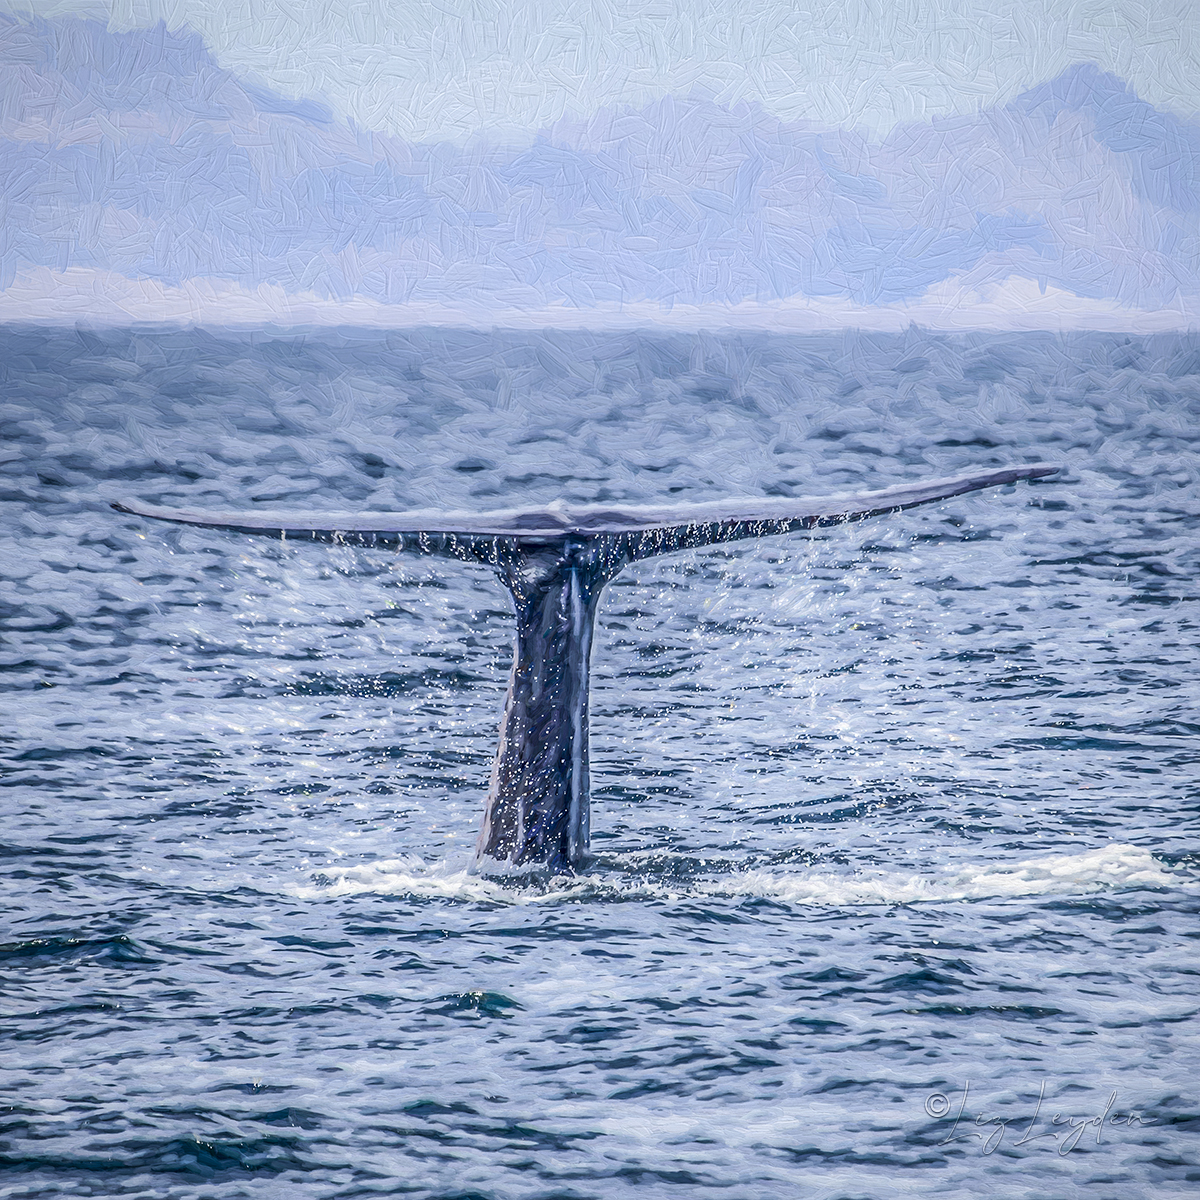 Blue whale tail fluke